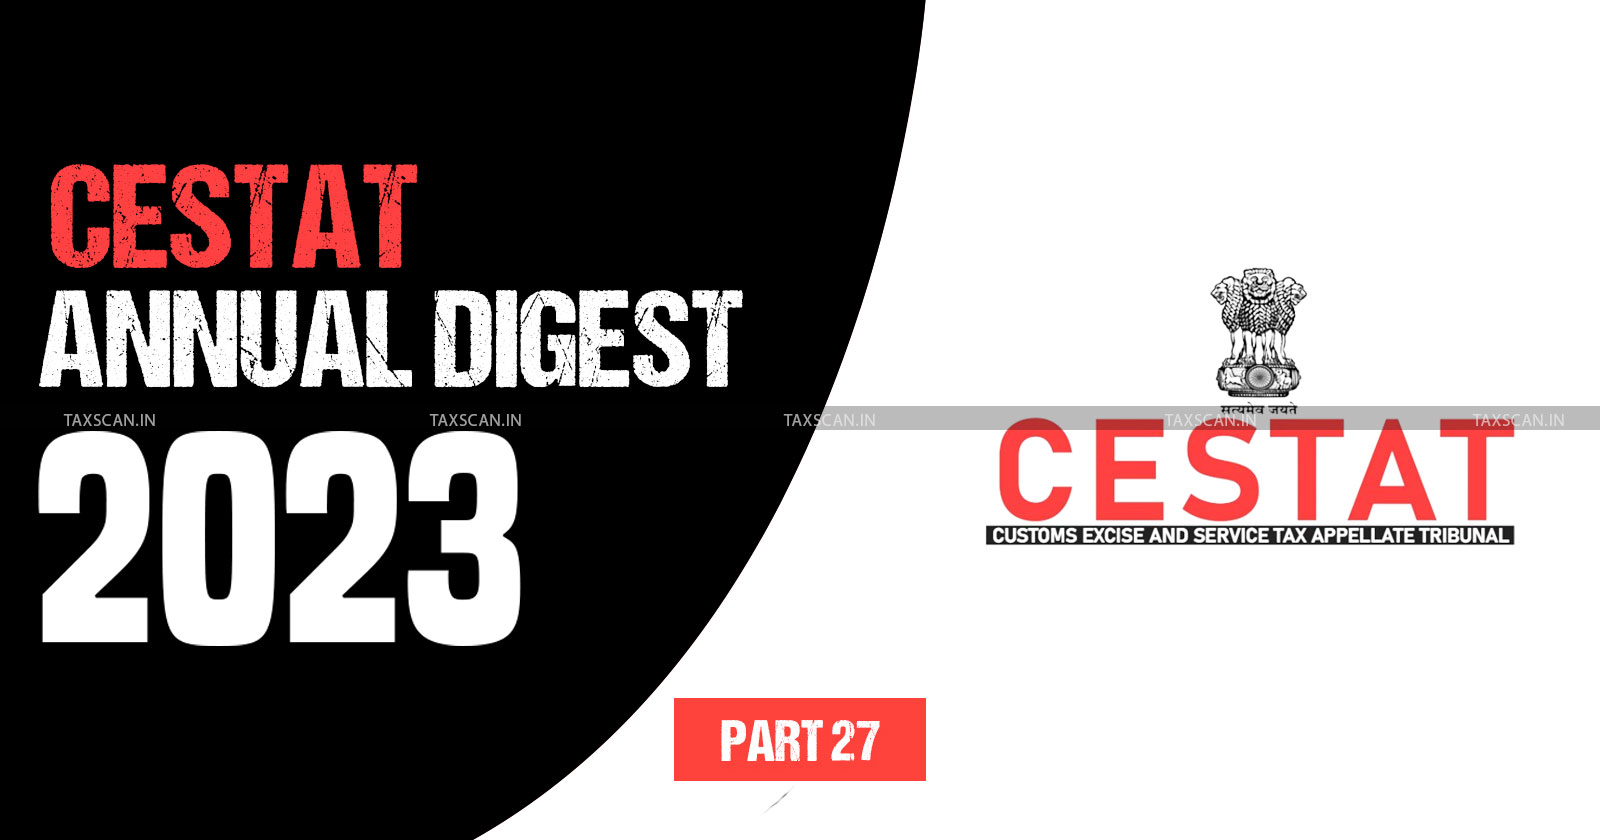 Annual Digest 2023 - CESTAT - Annual Digest 2023 -TAXSCAN